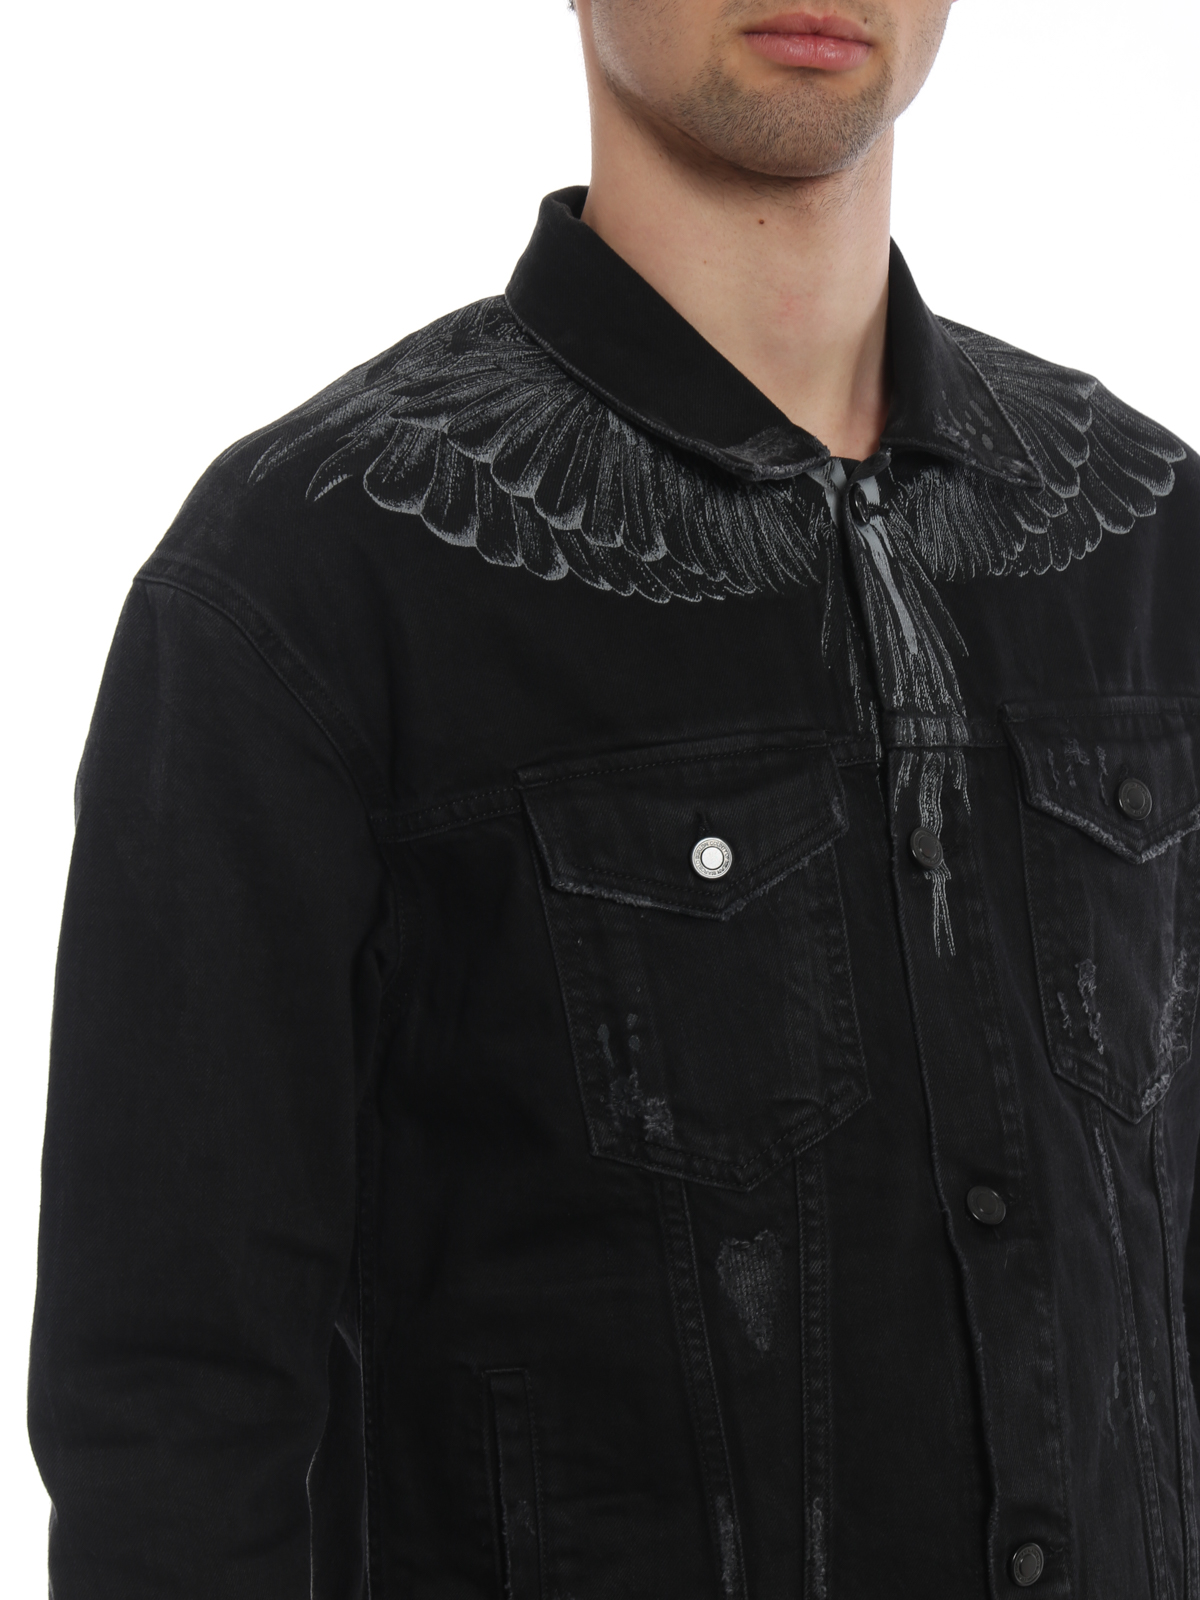 Denim jacket Marcelo Burlon - Black cotton - CMYE002S187571676810